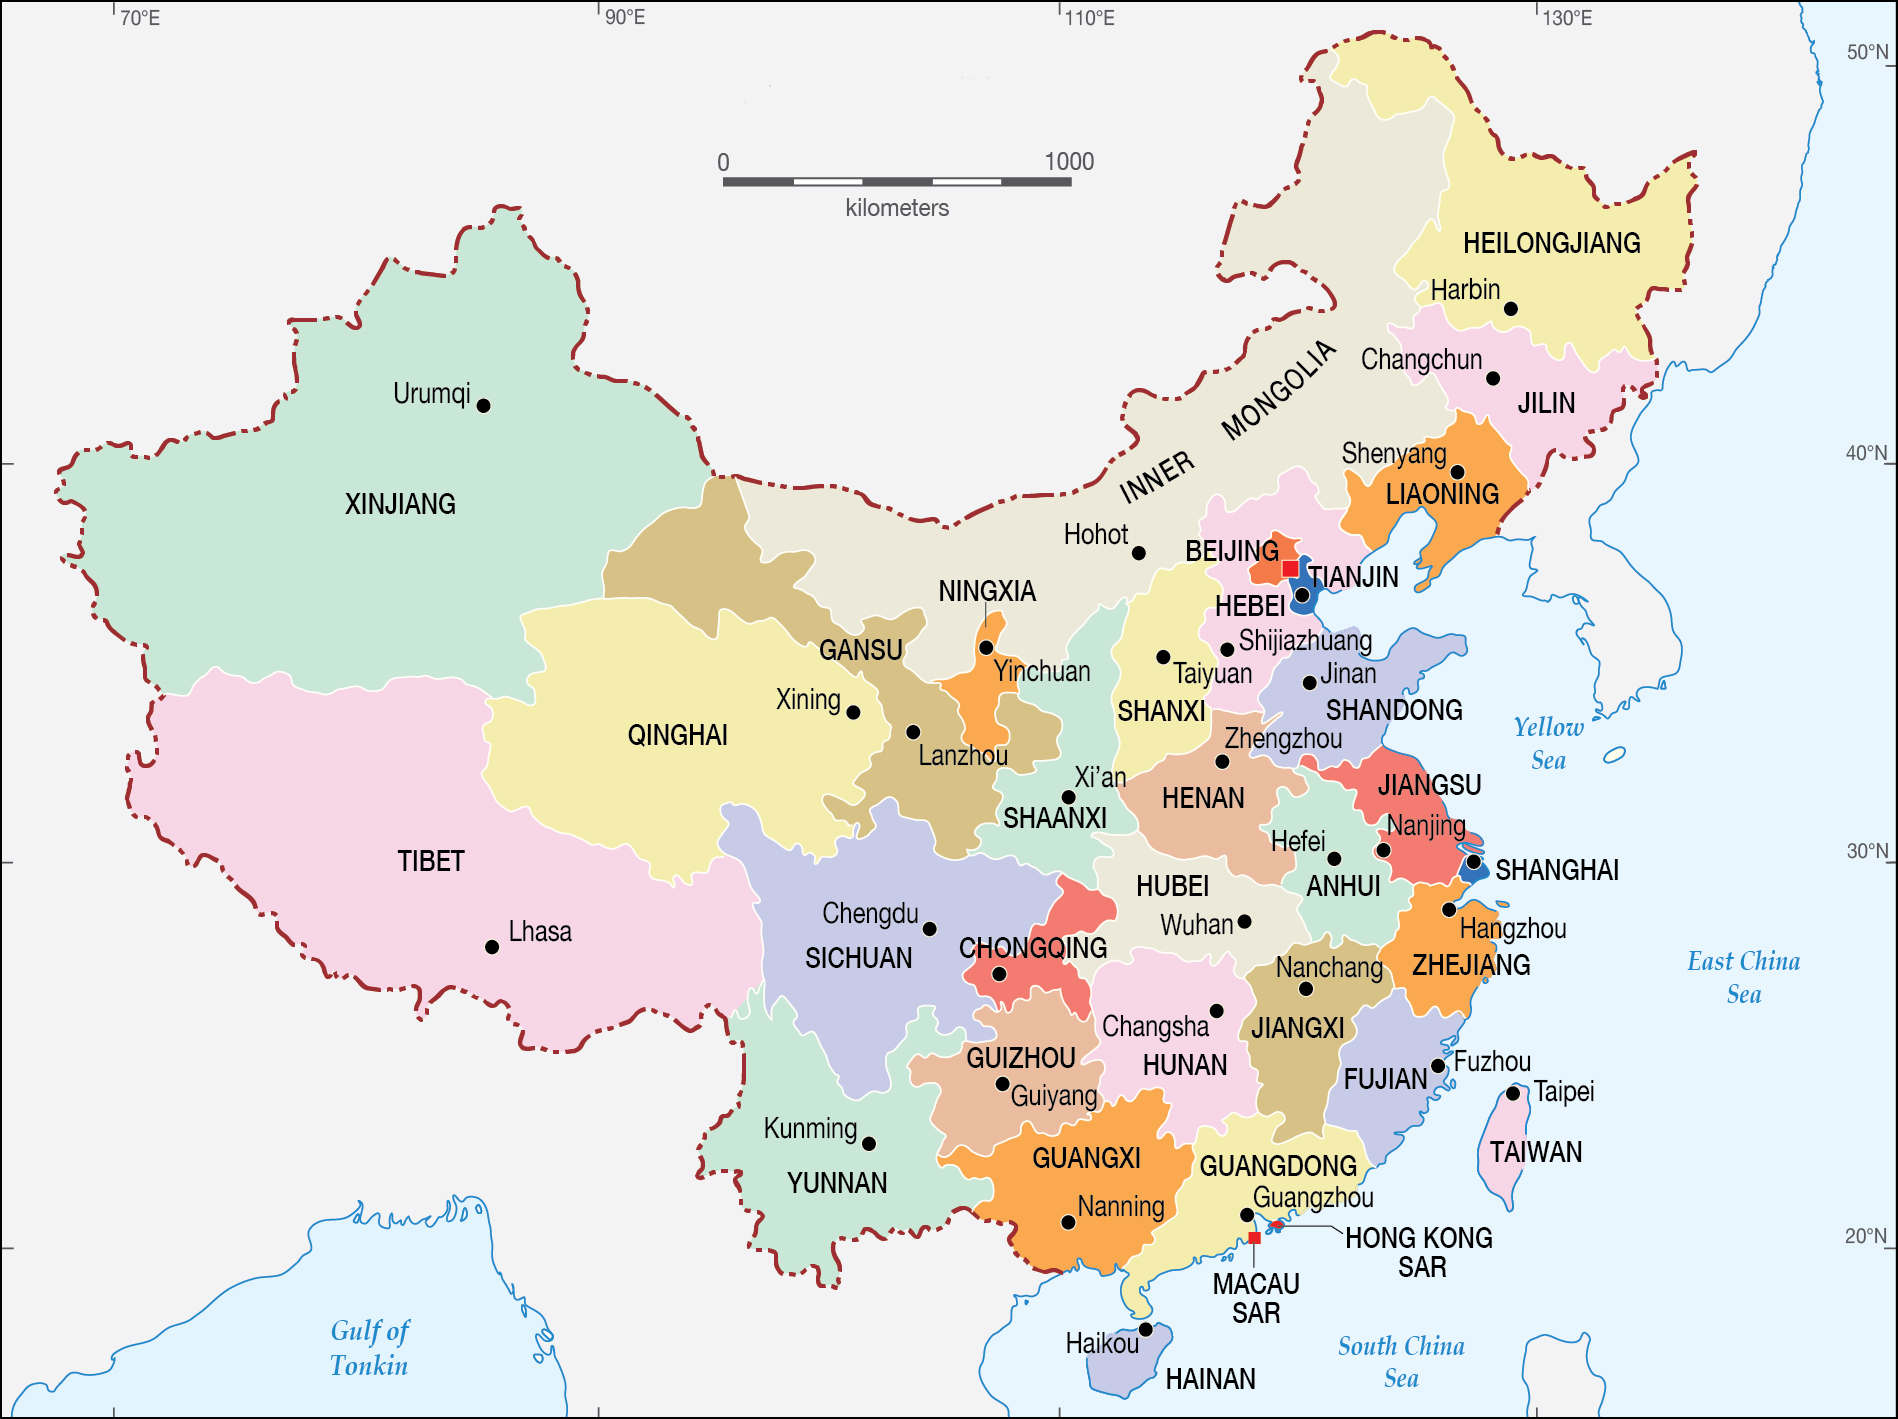 Tibet on Asia Map